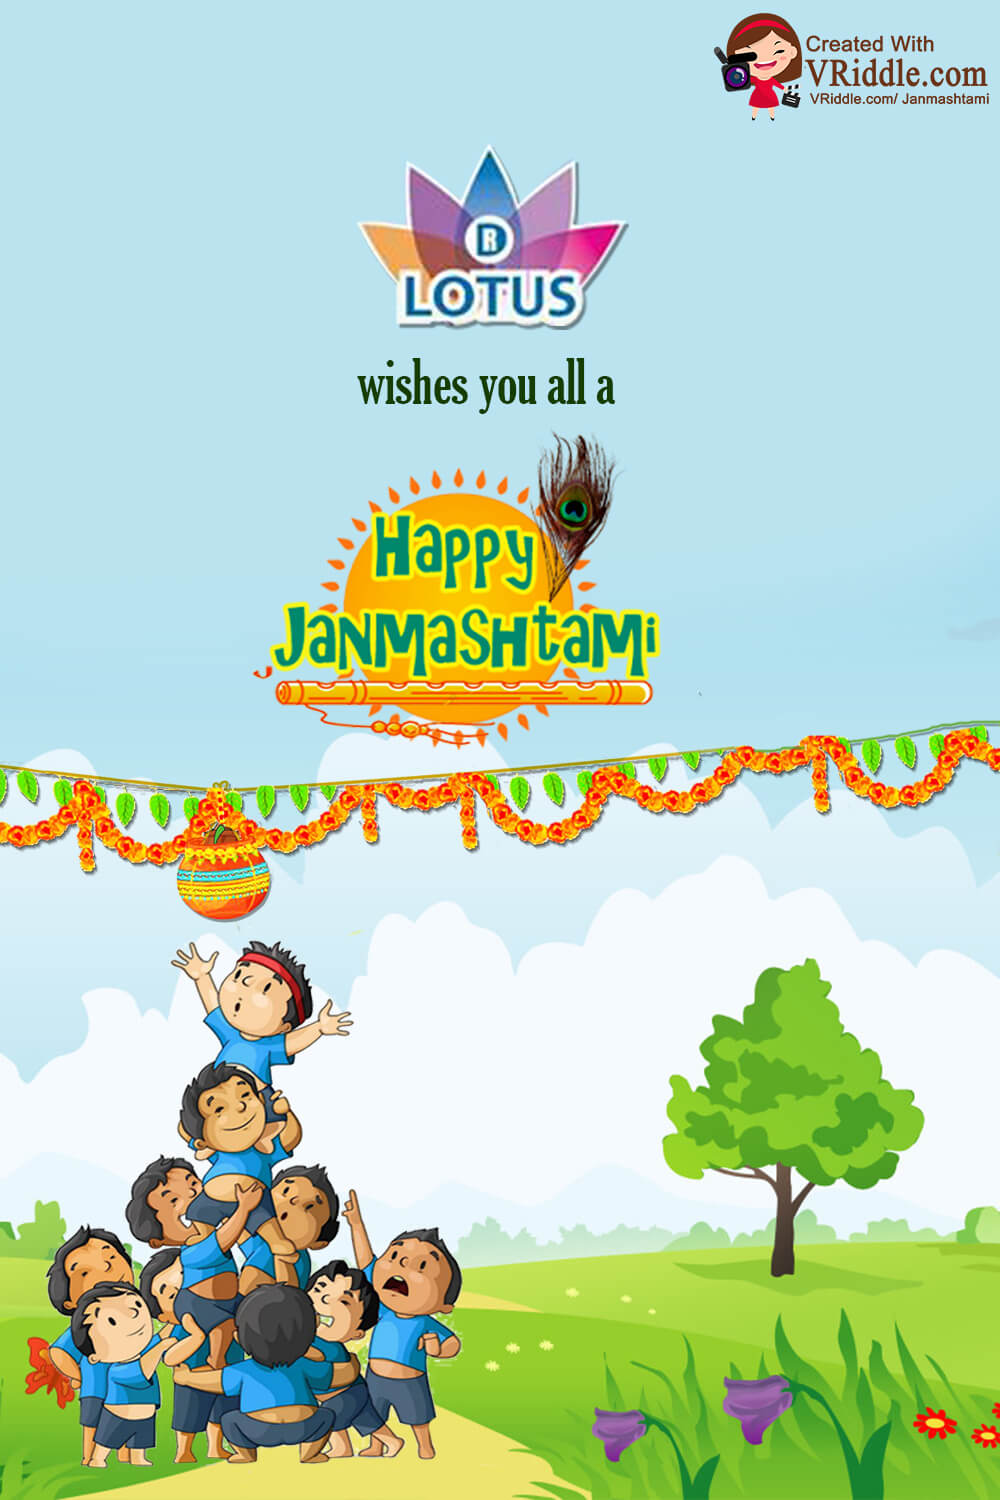 Sri Krishna Janmastami, Greeting Card, Lord Krishna, Tree, Children, Playing, School, College, Education, Wishes, Greeting Card, Sky, Blue, Peacock